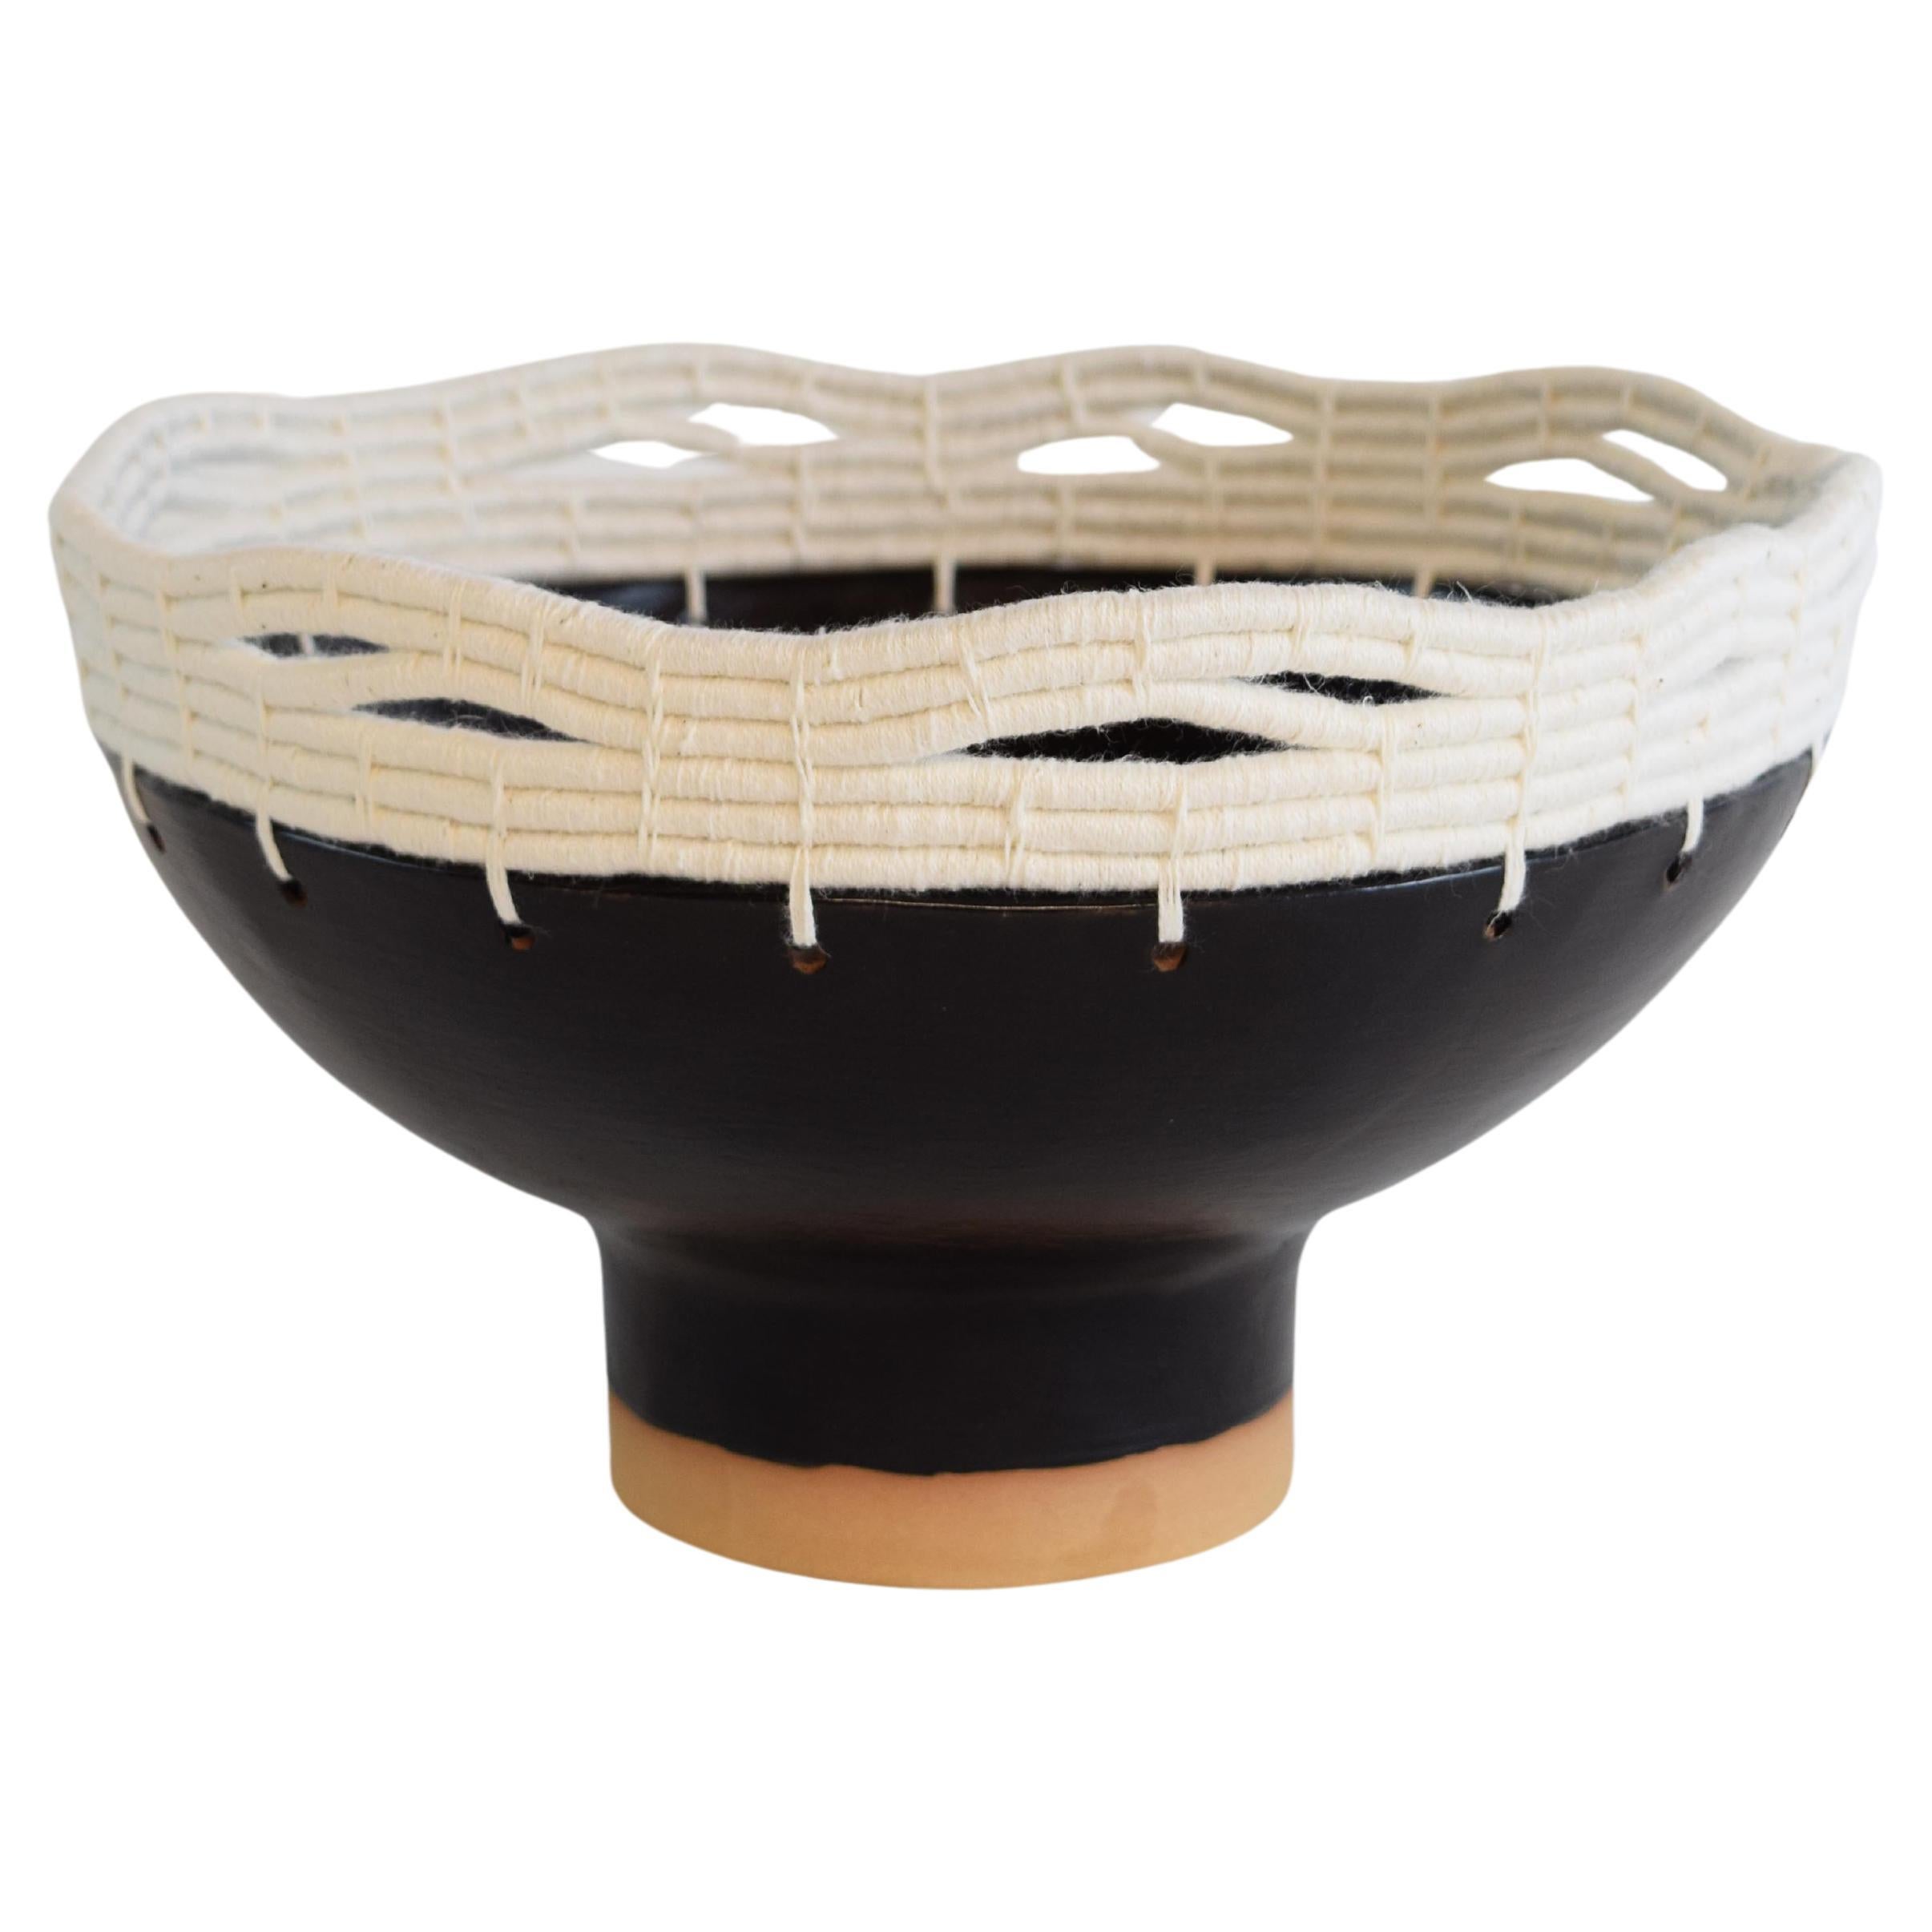 One of a Kind Handmade Ceramic Bowl #804, Satin Black Glaze & Woven White Cotton